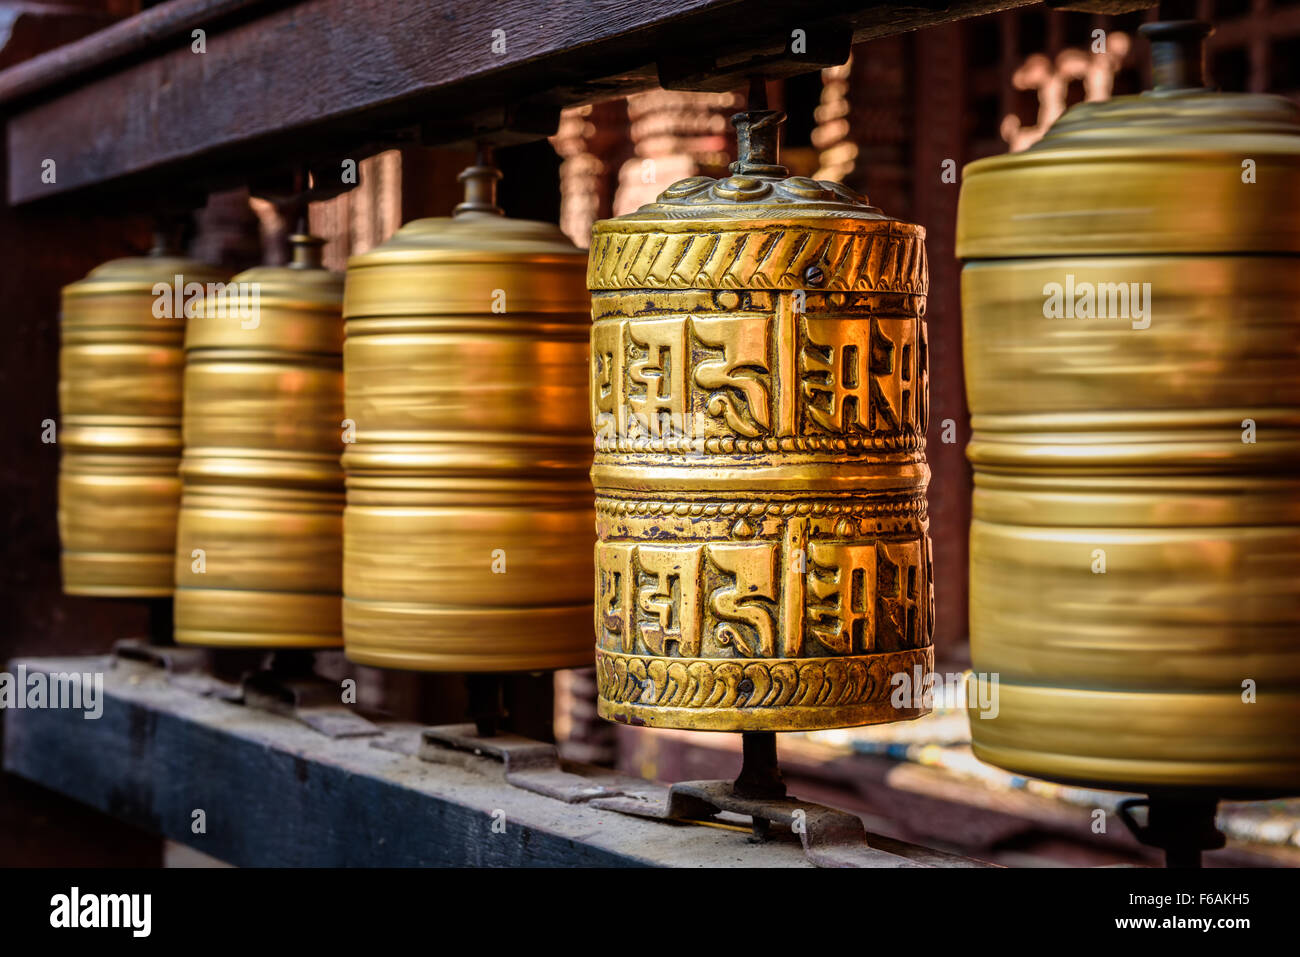 Golden tibetan prayer wheels in a Buddhist temple in Nepal Stock Photo